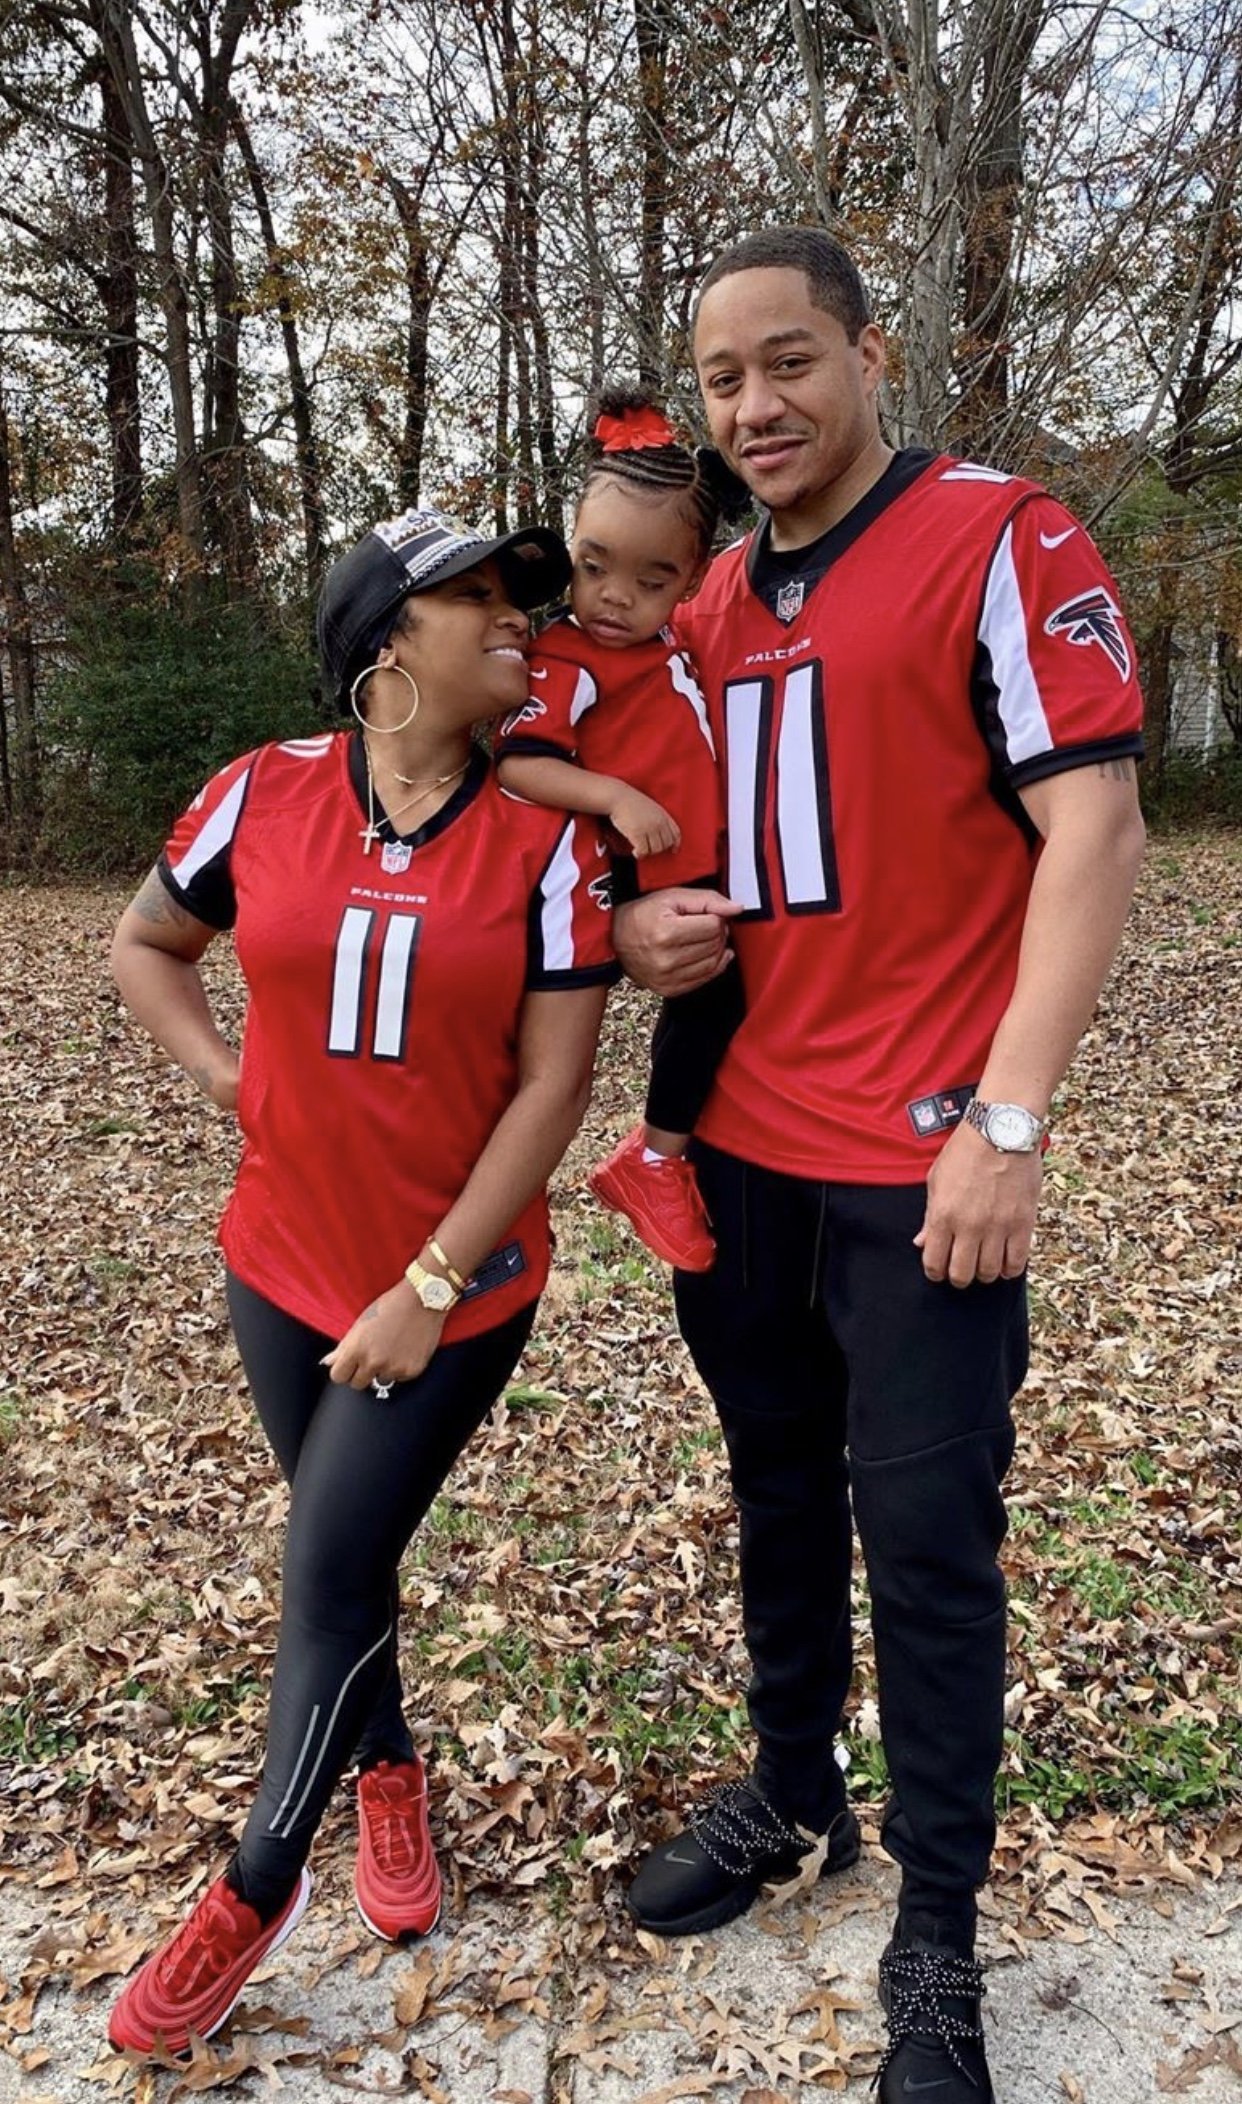 A screenshot of Toya Johnson, Robert Rushing and Reign Rushing in matching Falcons jerseys | Source: Instagram/ToyaJohnson